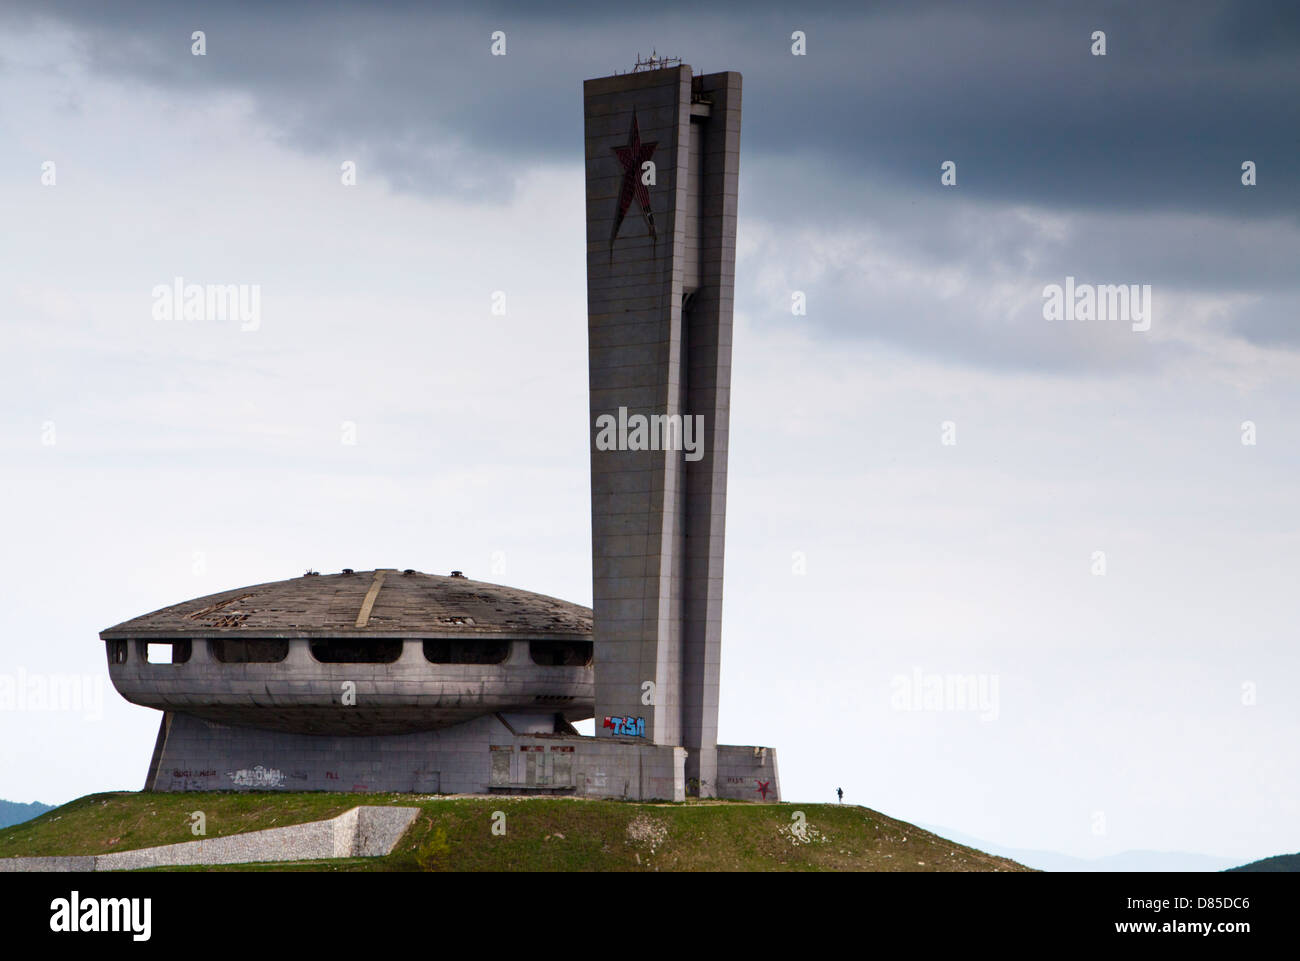 Dark clouds over the communist-era Buzludzha monument in central Bulgaria Stock Photo